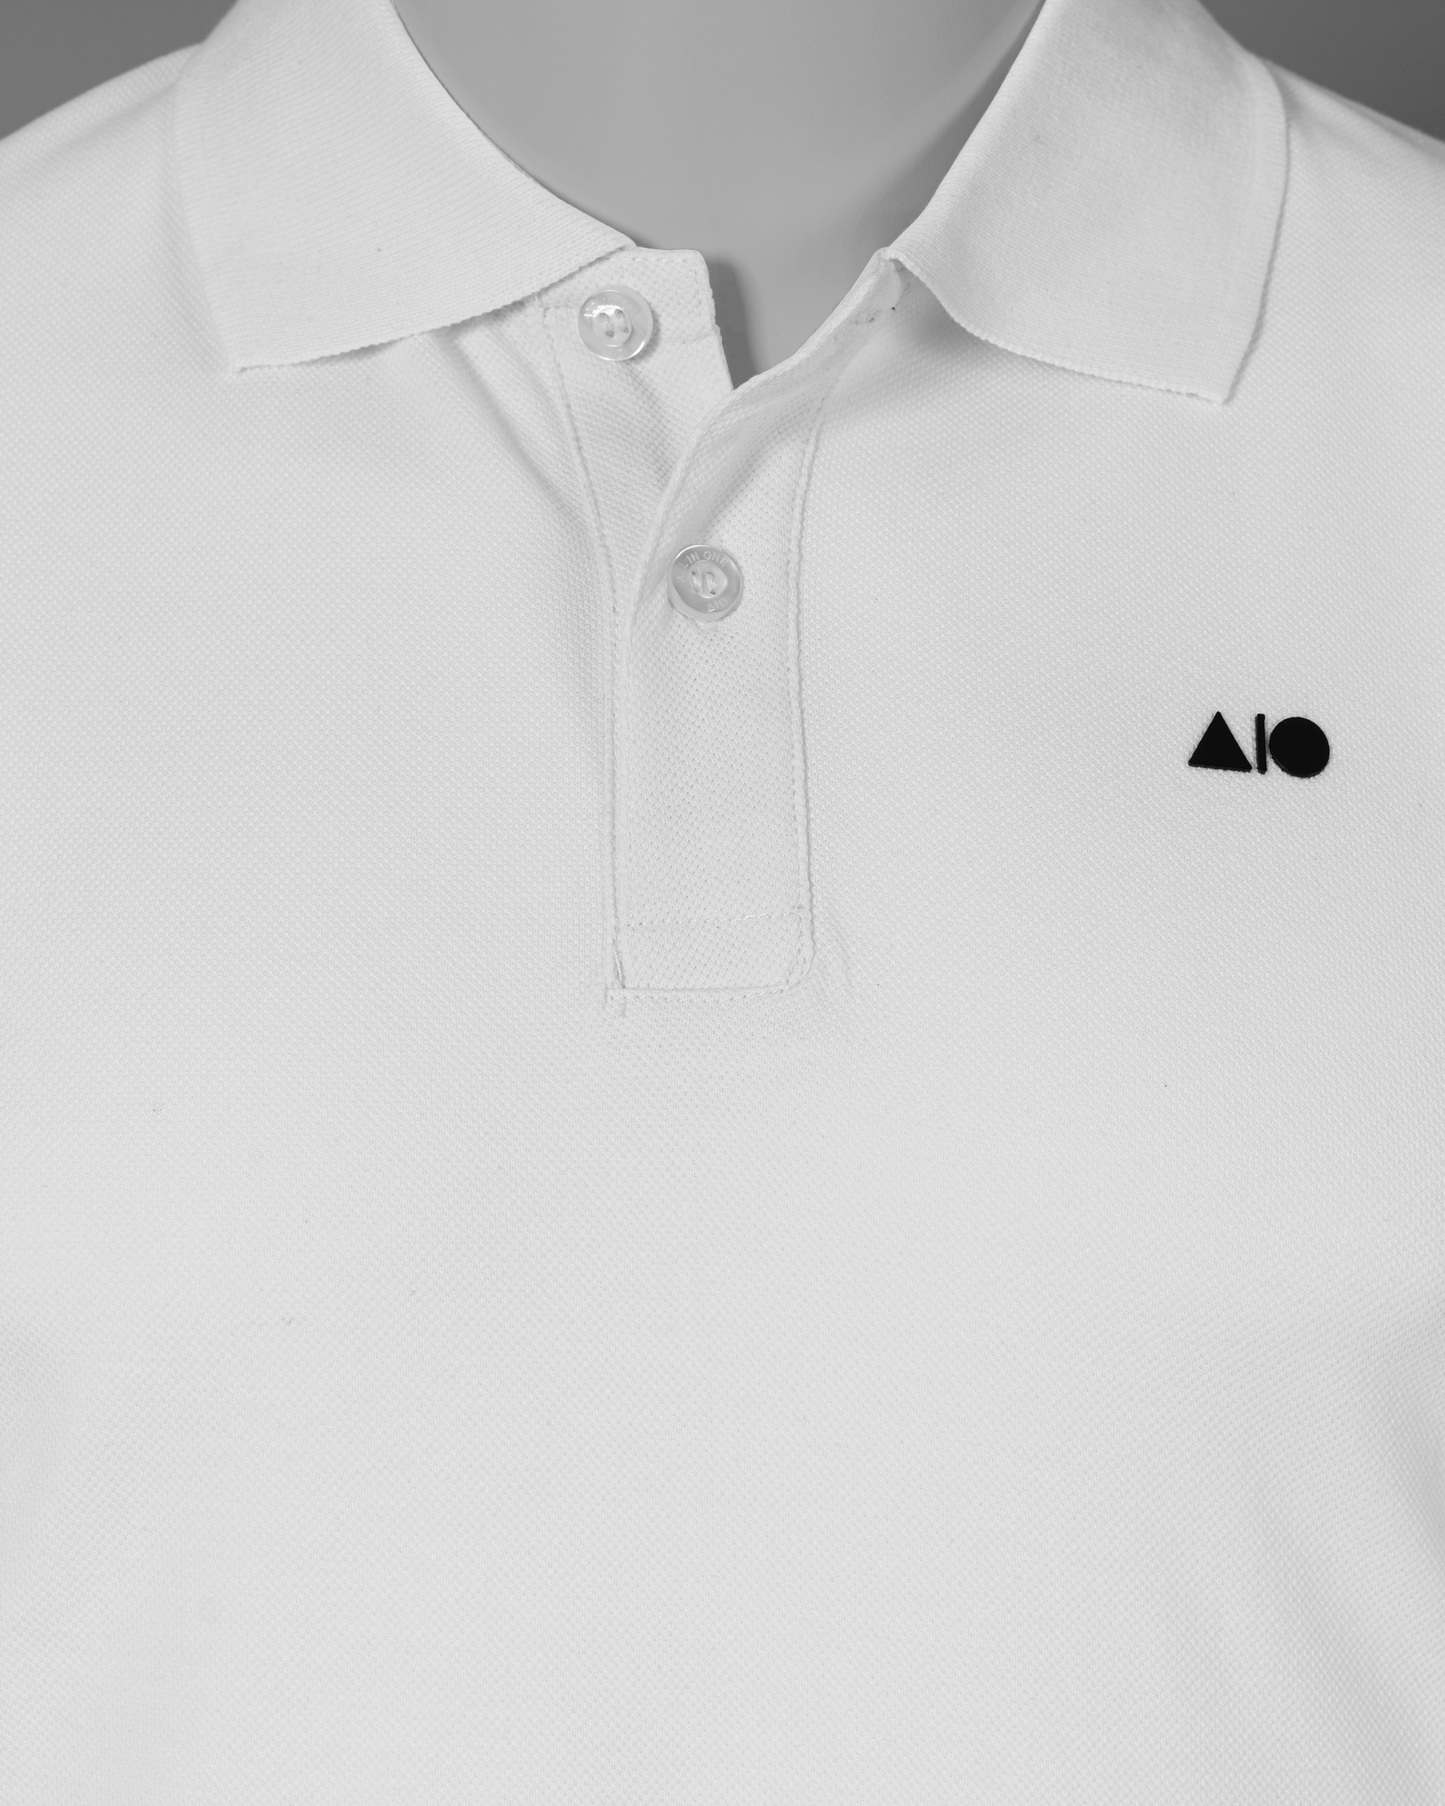 Mens Basic Polo Shirt - Combo (White, Yellow & Maroon)